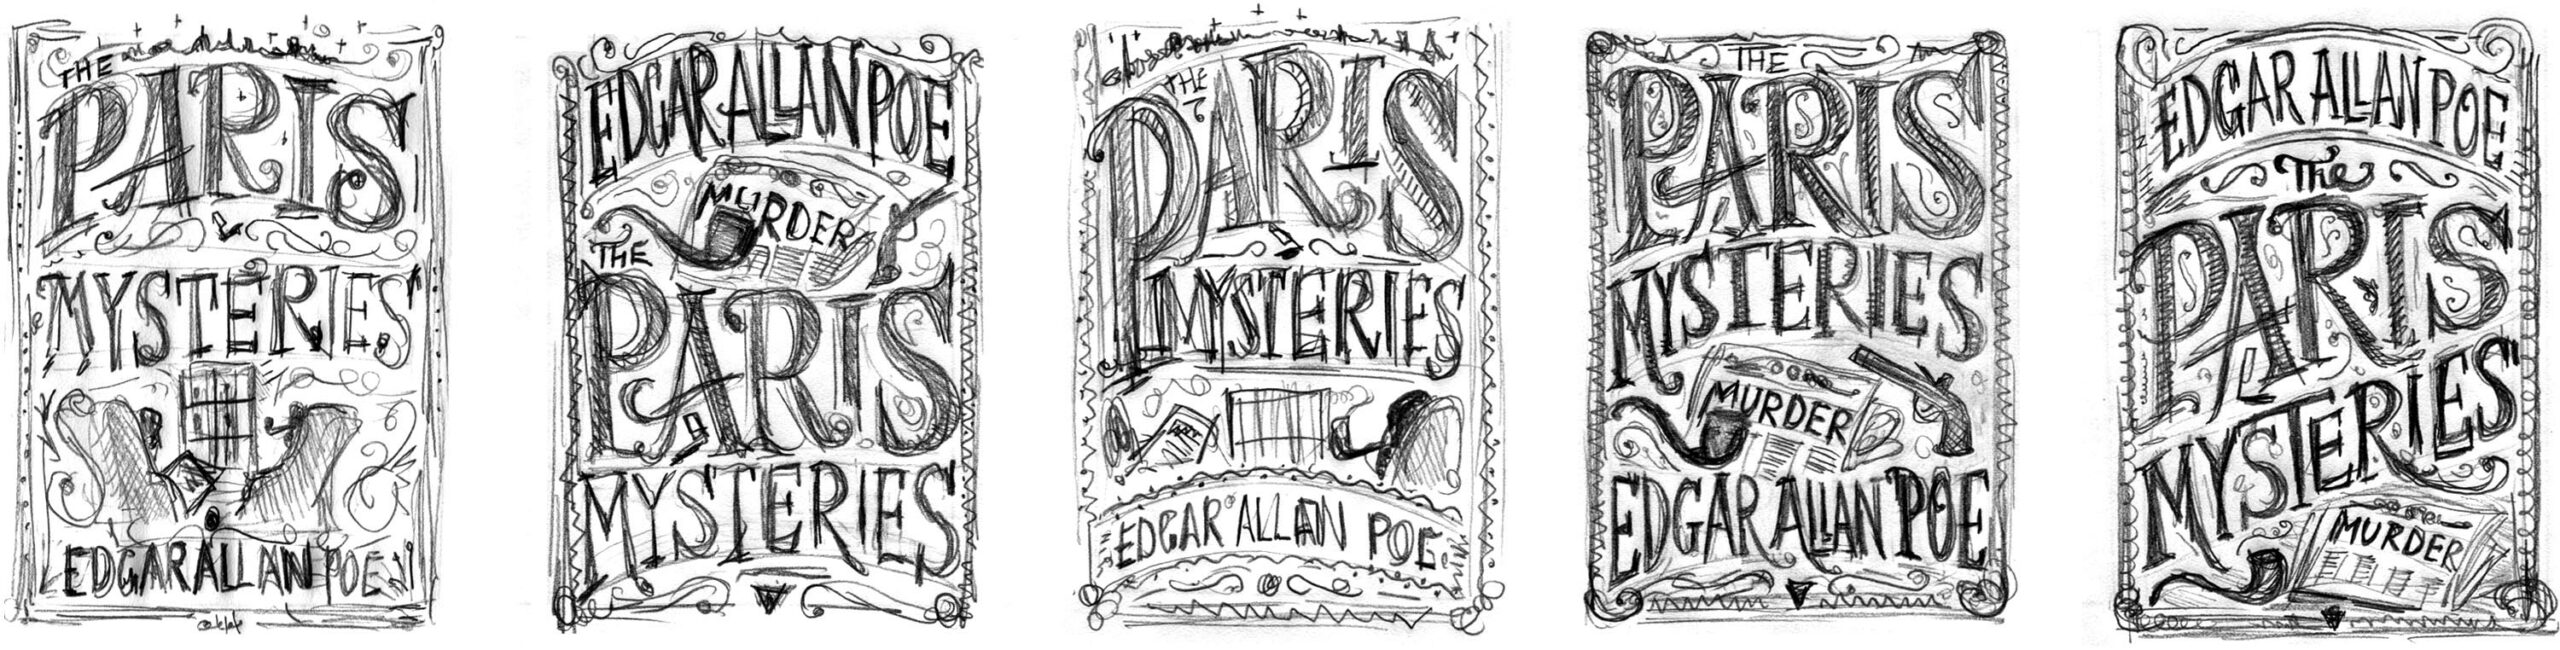 Edgar Allan Poe, Paris Mysteries, illustration, lettering, book sketches | Jamie Clarke Type